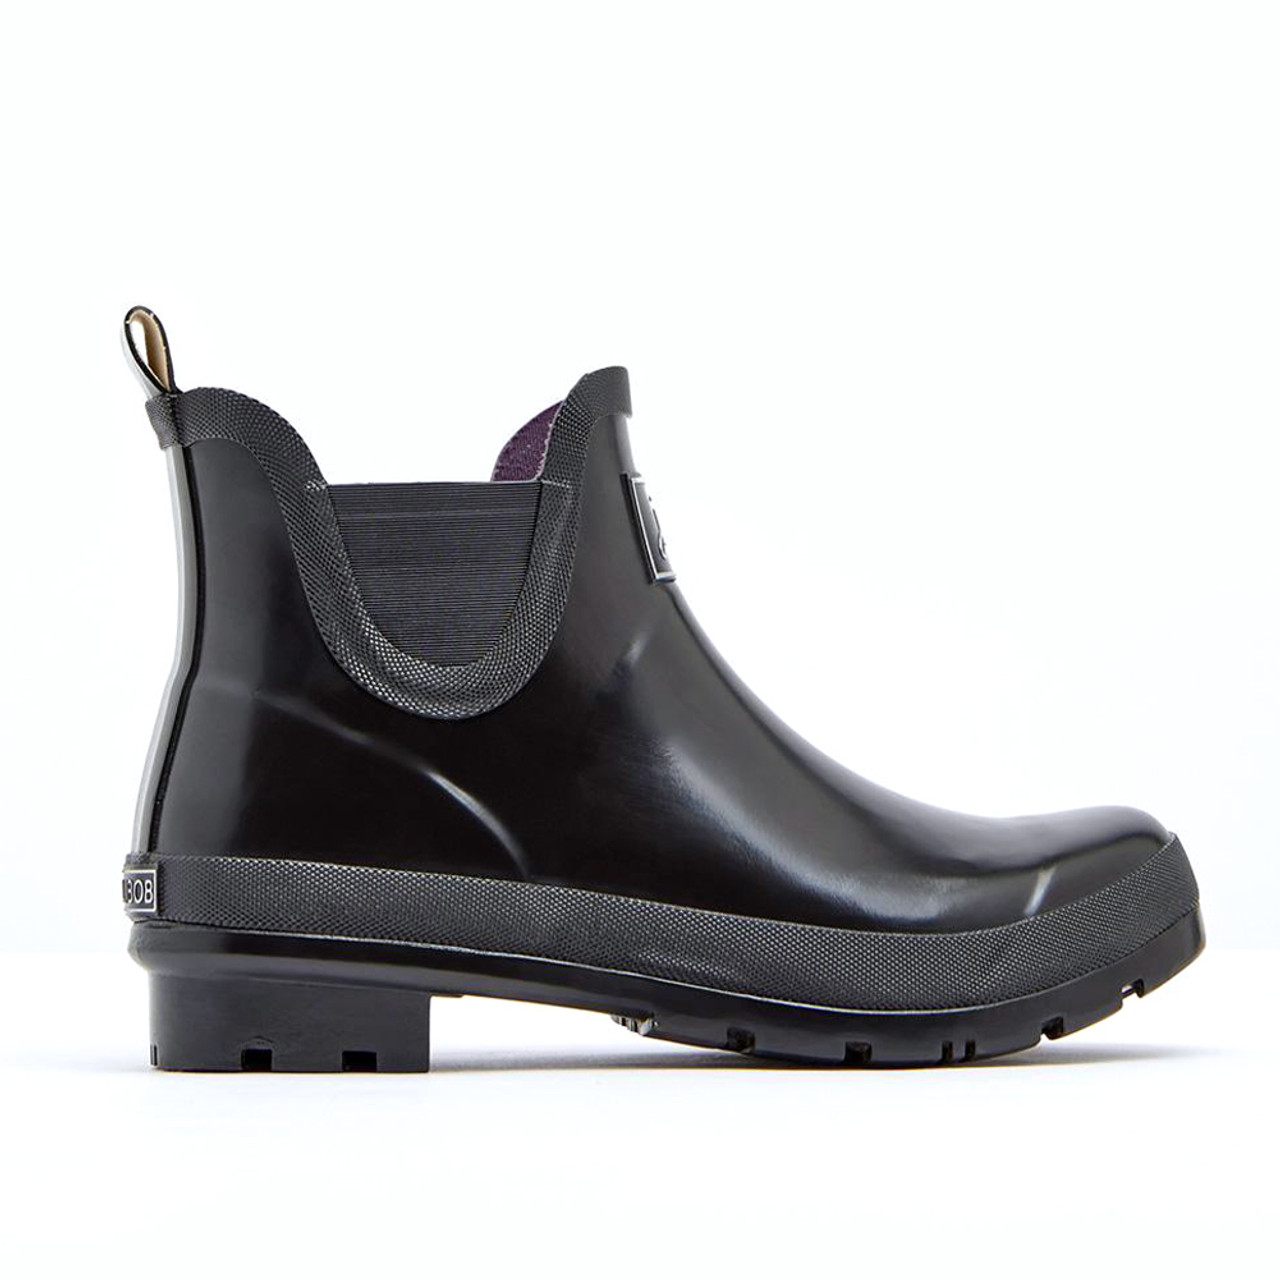 Joules Women's Wellibob Gloss Short Rain Boot - Black | Discount Joules ...